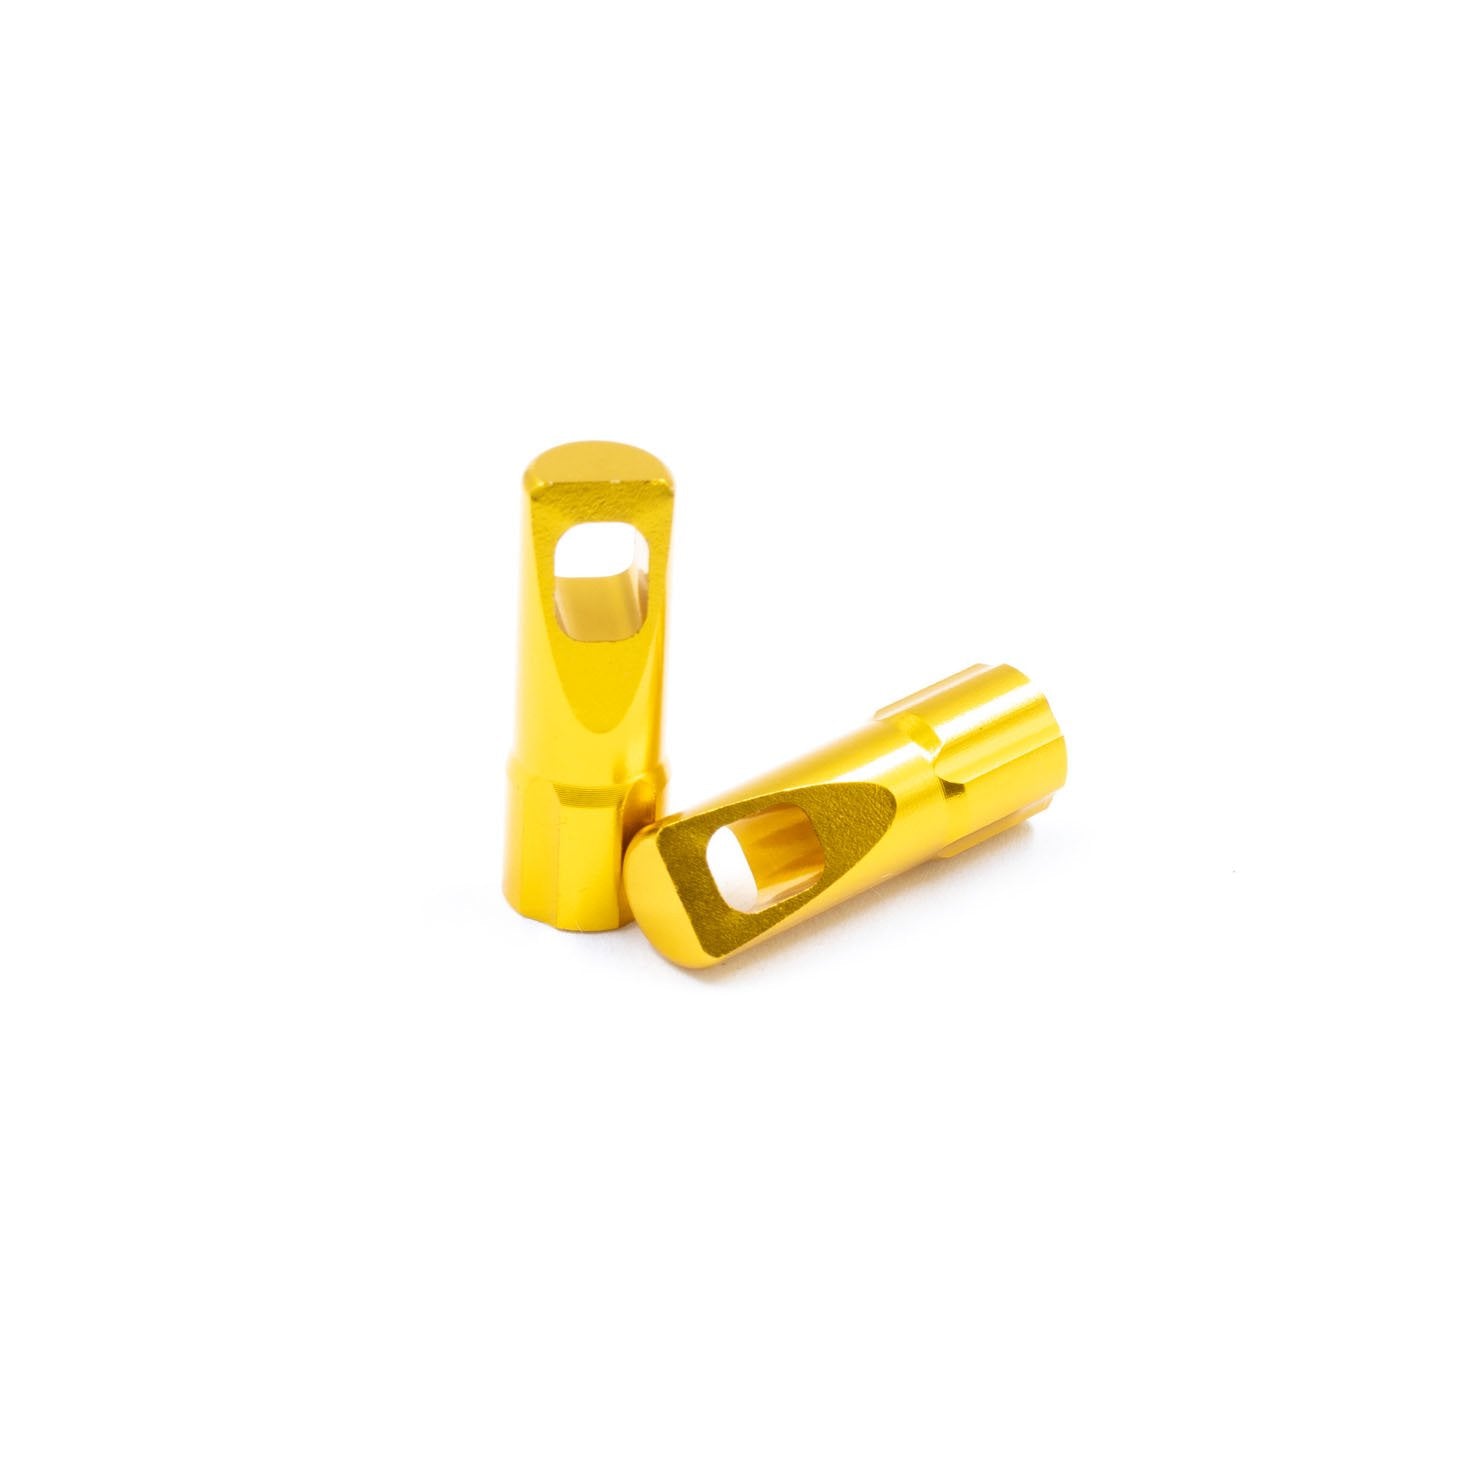 Gold, ultra-lightweight aluminium valve cap set for Presta valve types for road and mountain bikes